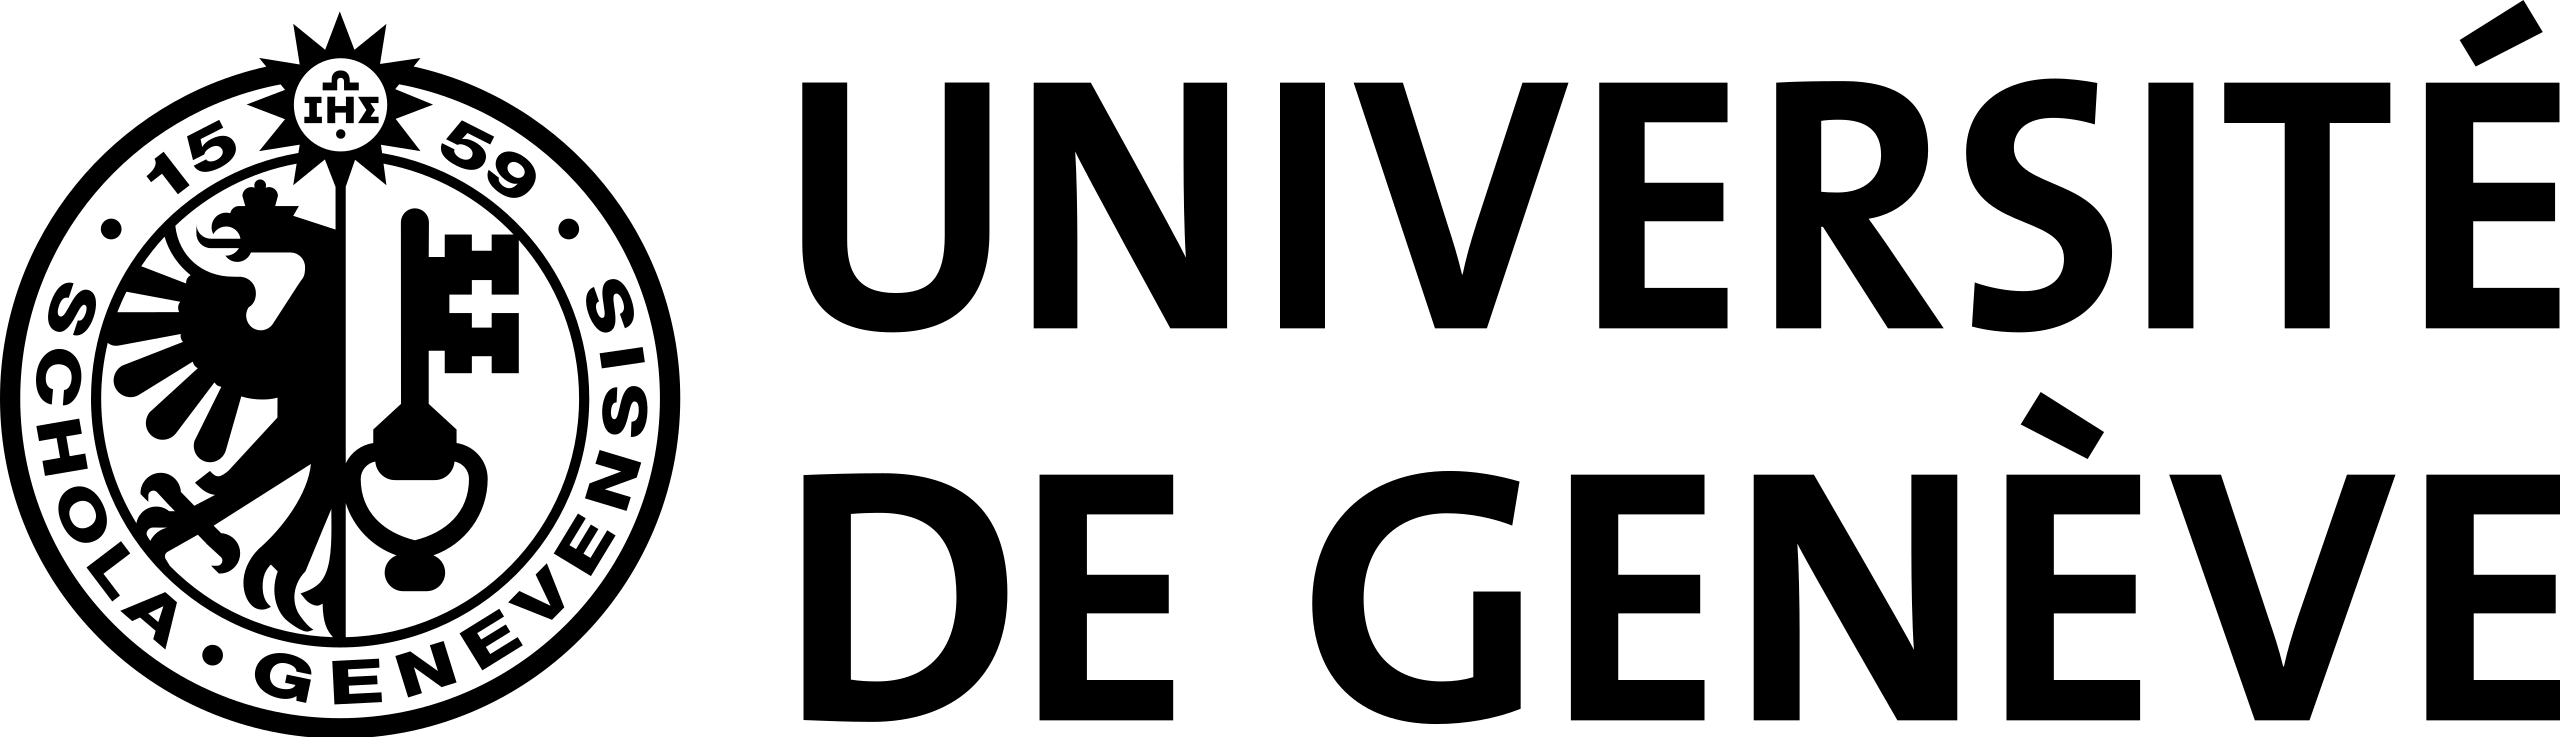 2560px-Uni_GE_logo.svg